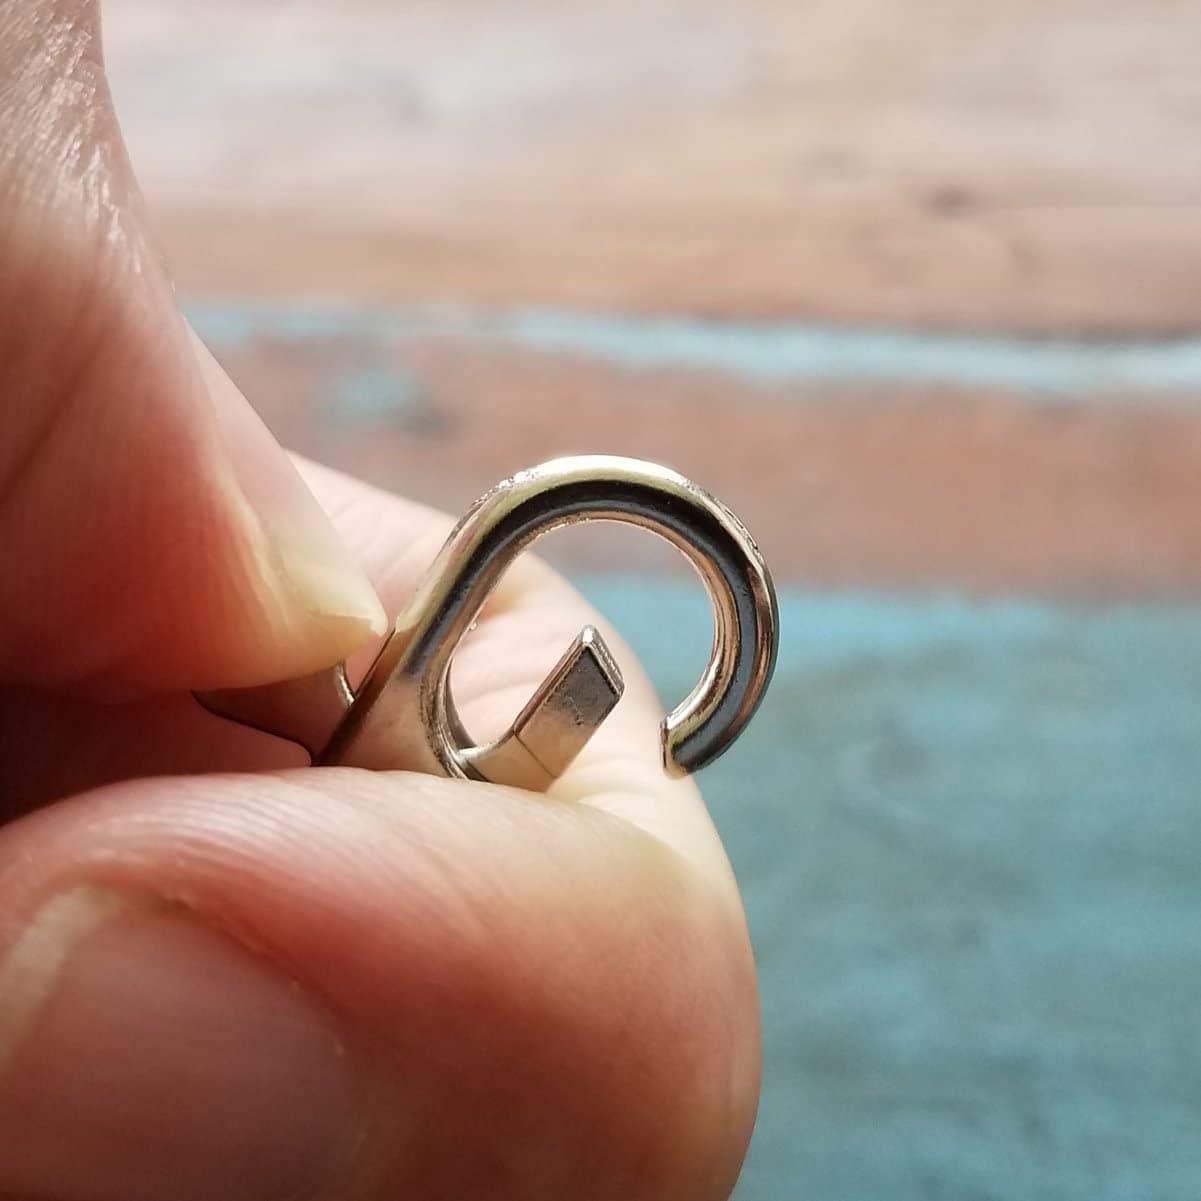 1.5 - 1 1/2 Heavy Duty Split Key Ring, Nickel Plated - USA (10